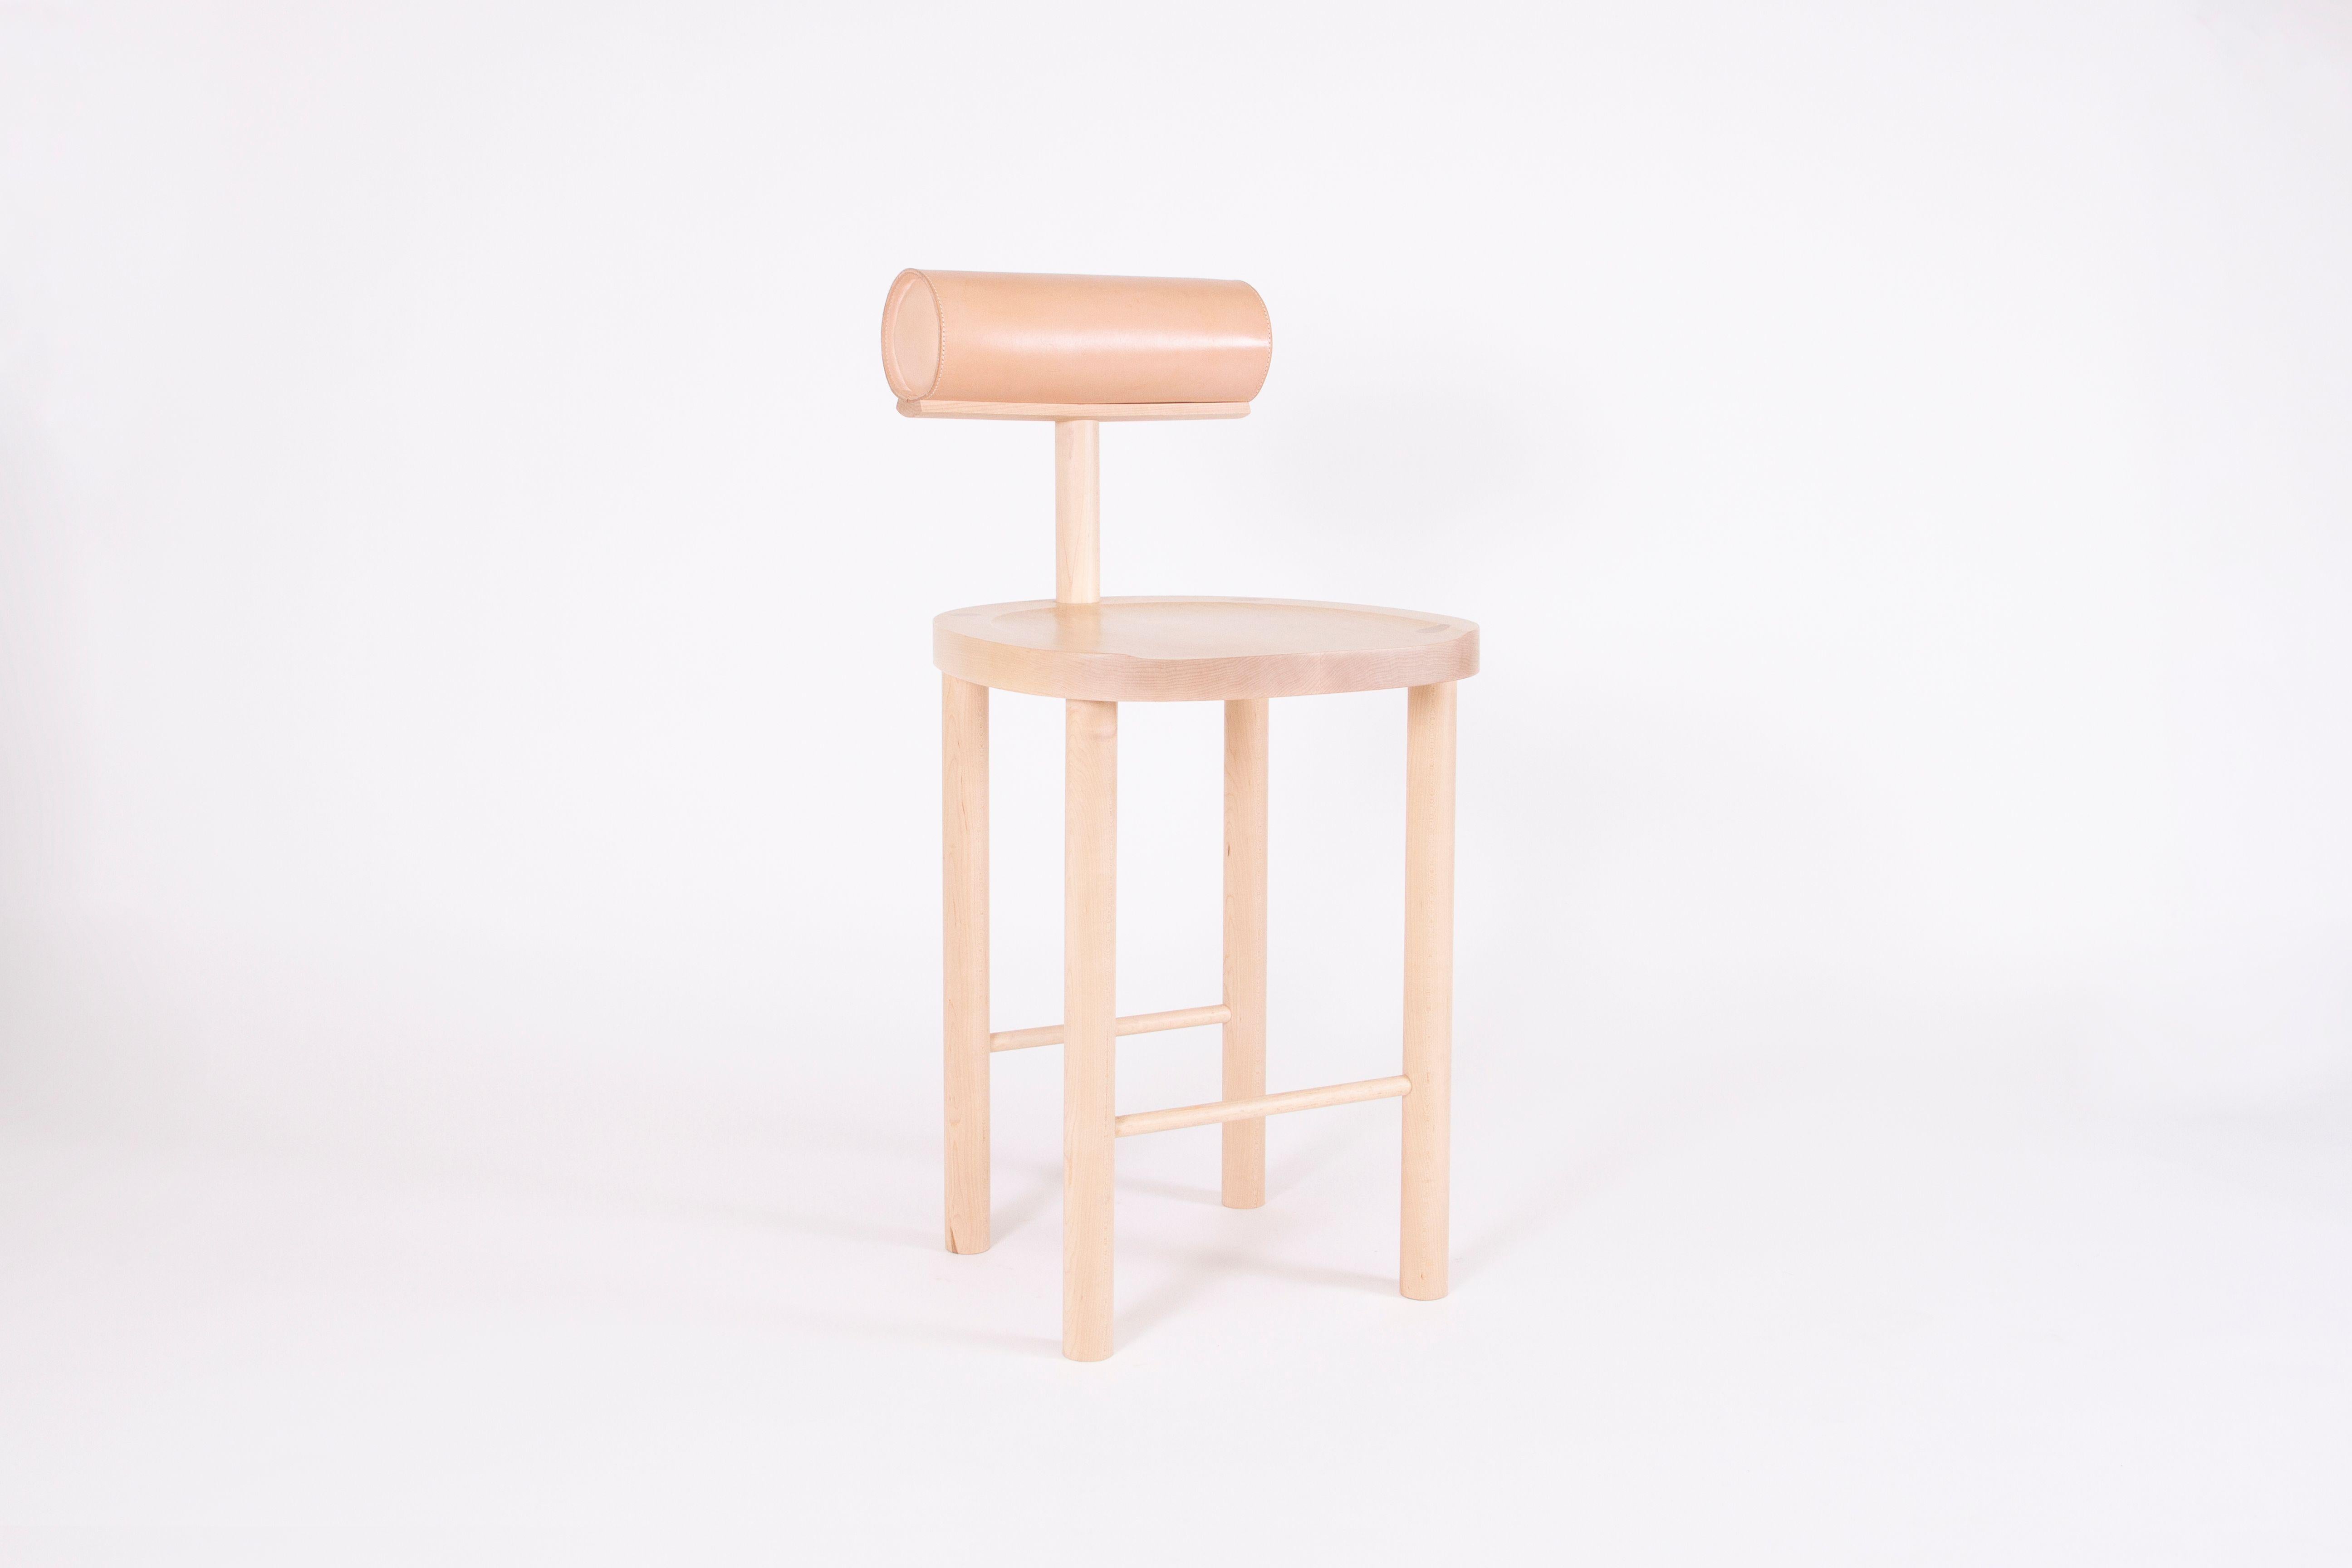 American Una Maple Chair by Estudio Persona